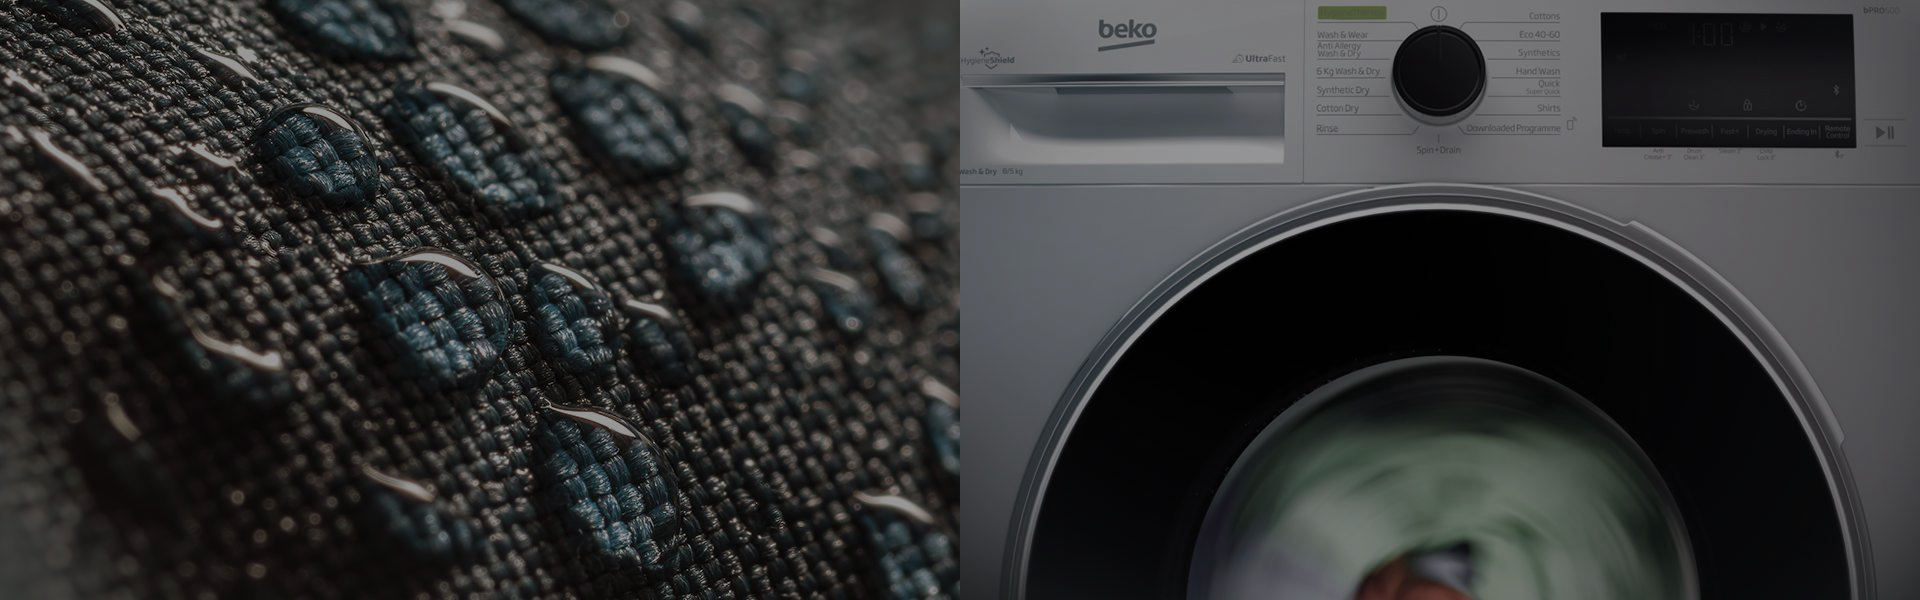 Beko UltraFast Washer Dryer